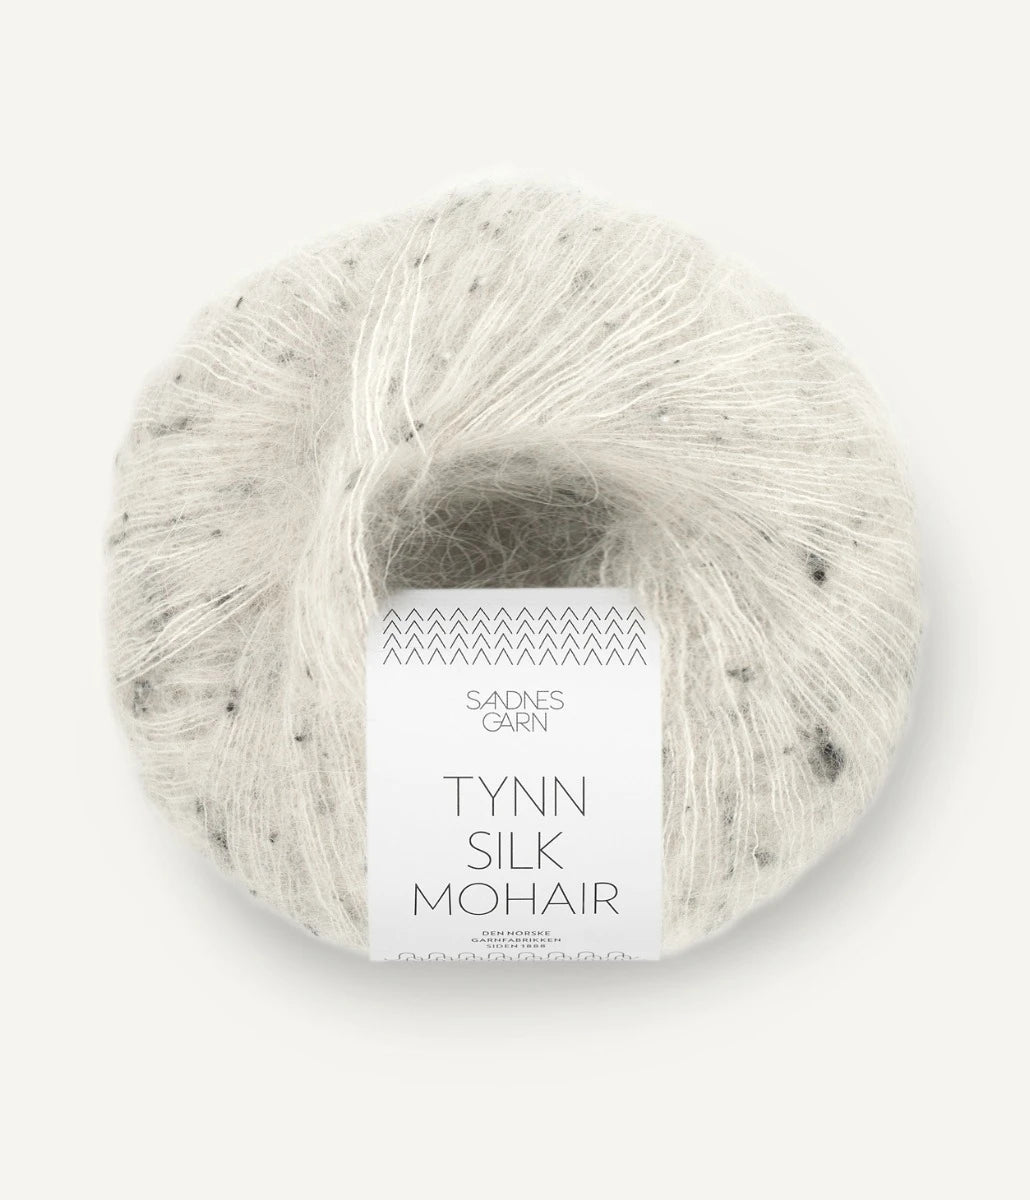 Kuvassa on Sandnes Garn Tynn Silk Mohair -lanka (yarn) värissä Salt'n Pepper Tweed.